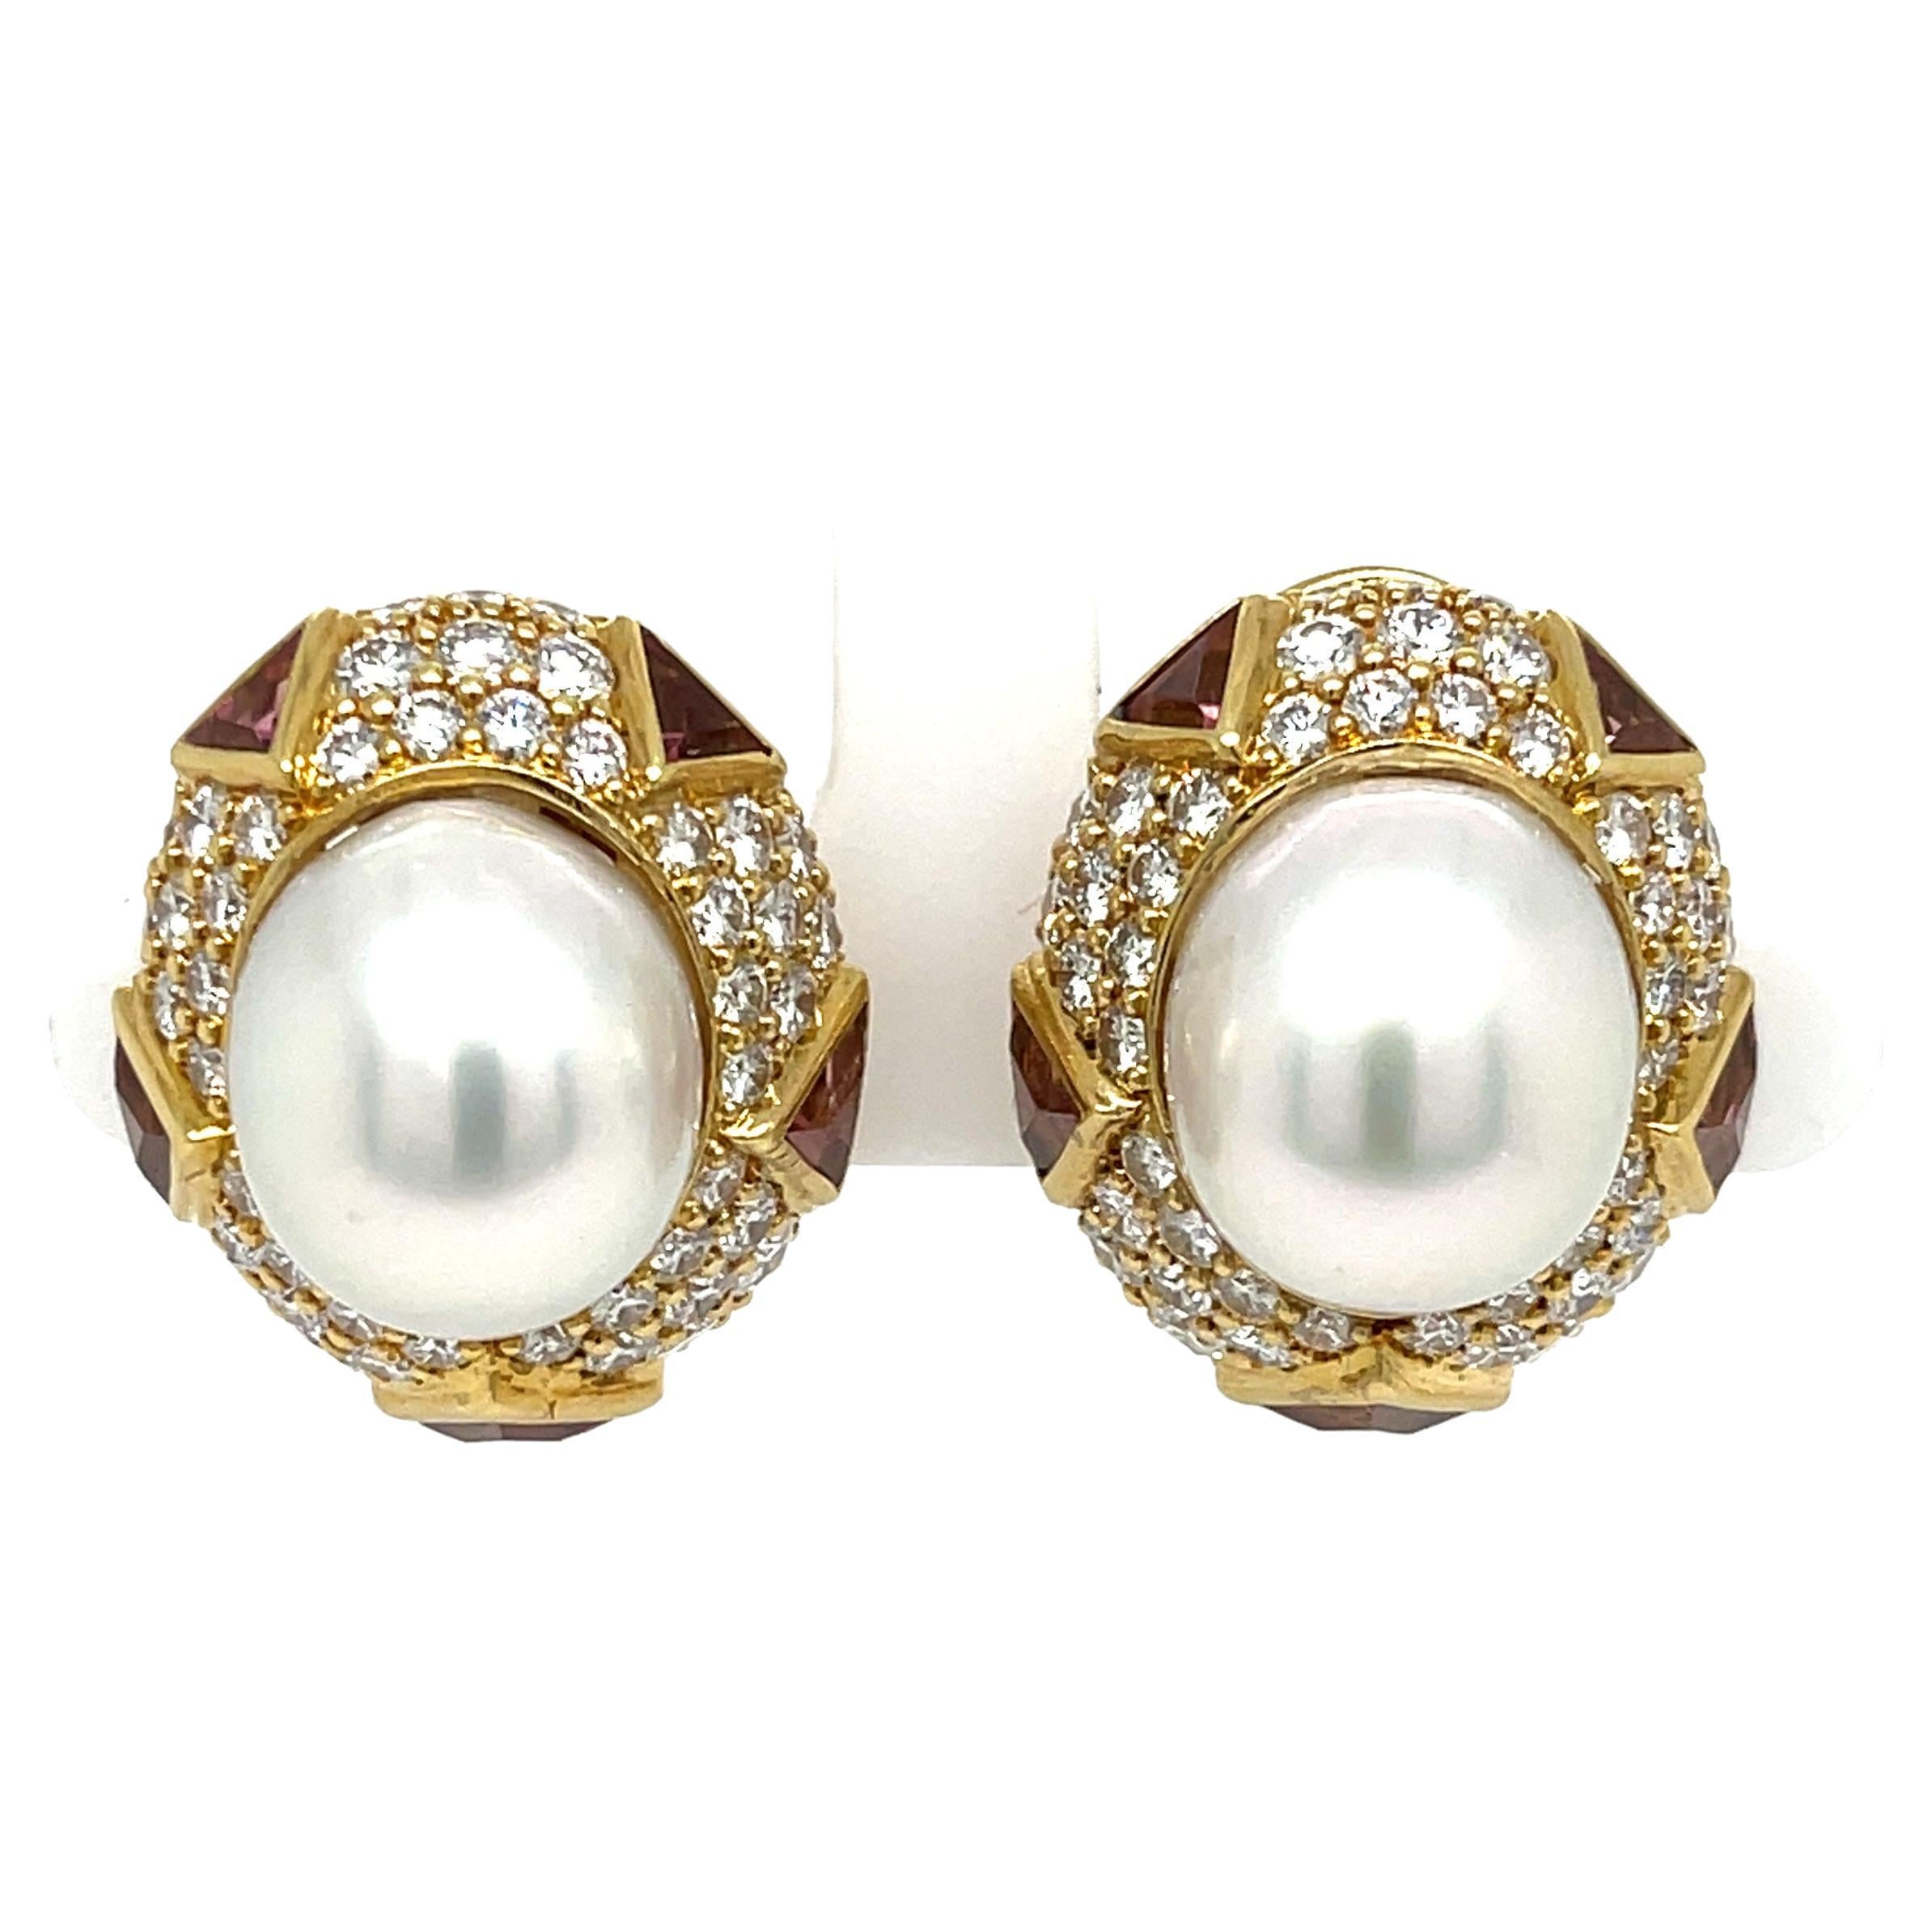 Assael Pearl Diamond Tourmaline Earrings in 18K Yellow Gold. 
Dimensions 1